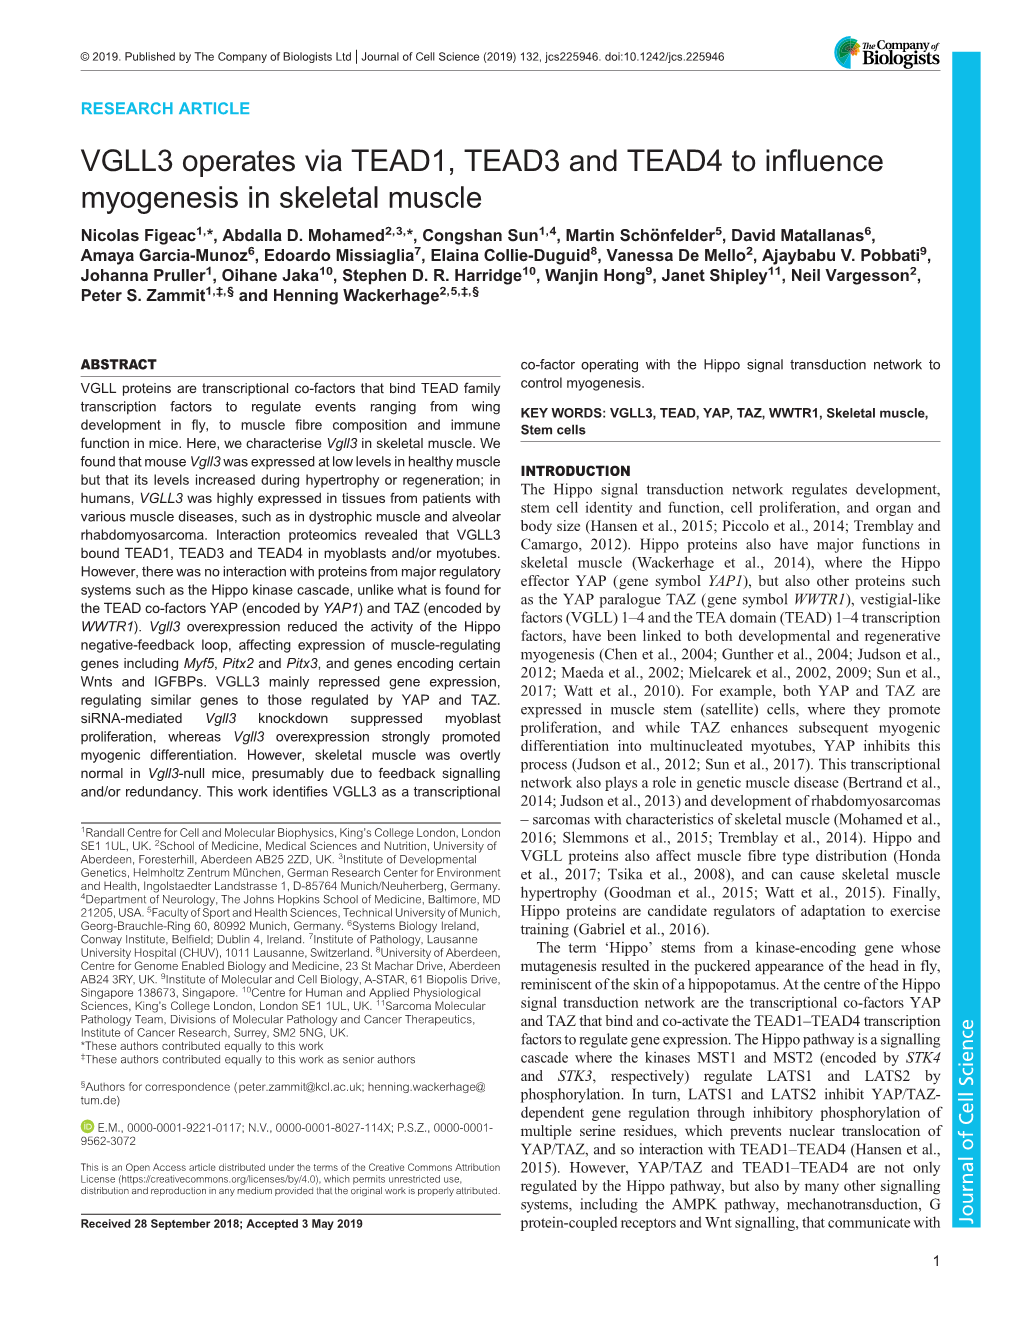 VGLL3 Operates Via TEAD1, TEAD3 and TEAD4 to Influence Myogenesis in Skeletal Muscle Nicolas Figeac1,*, Abdalla D